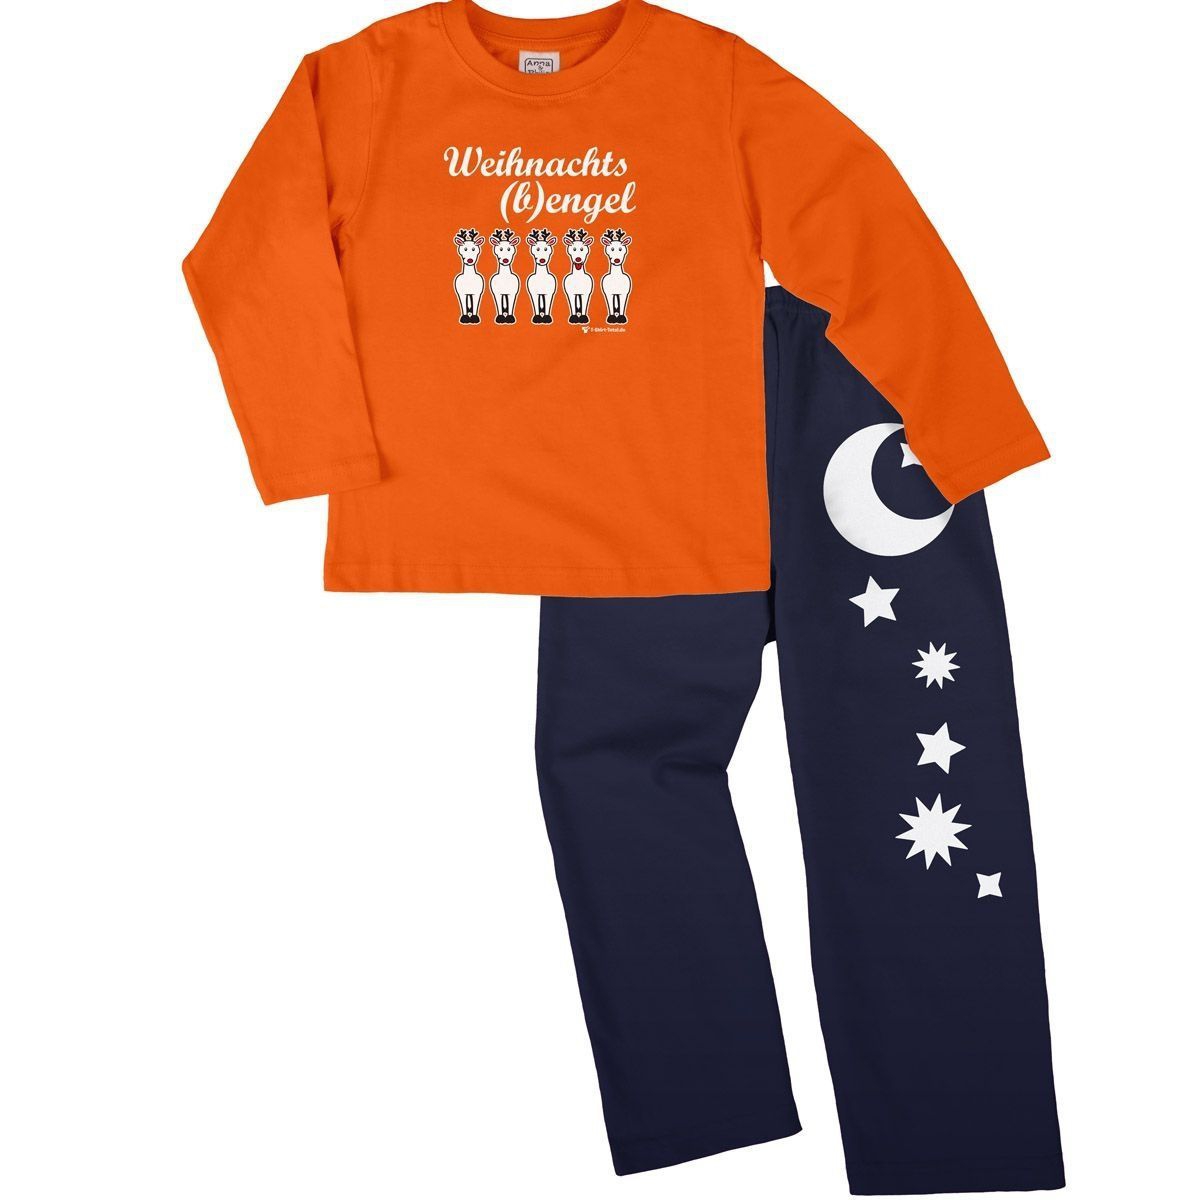 Weihnachtsbengel Pyjama Set orange / navy 92